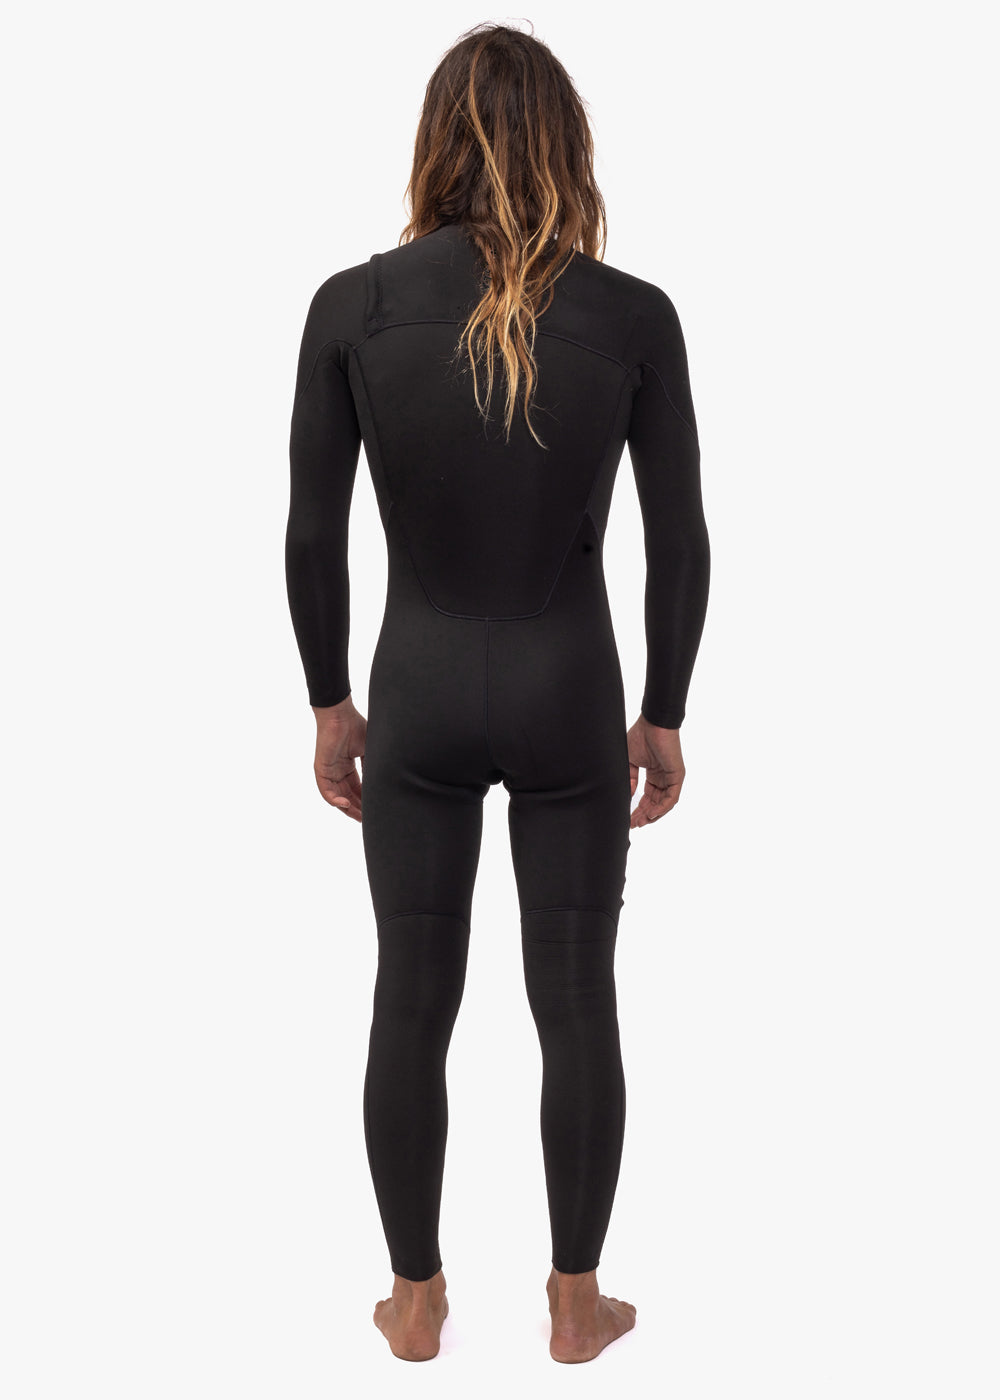 7 Seas 4-3 Full Chest Zip Wetsuit- No Logos